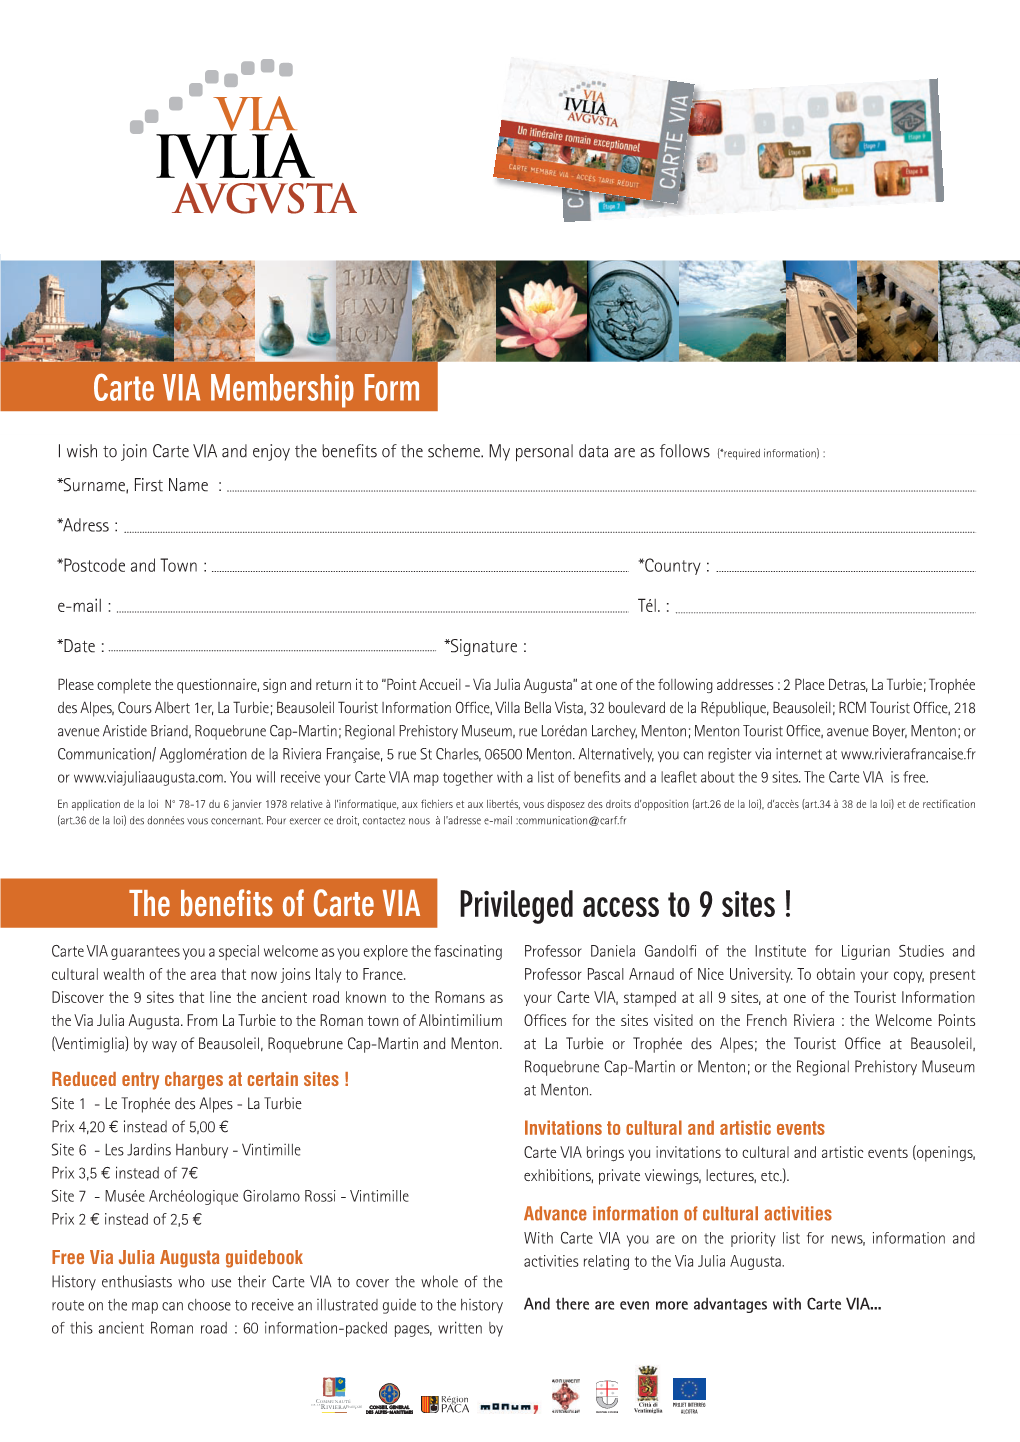 Download Here the Carte VIA Membership Form